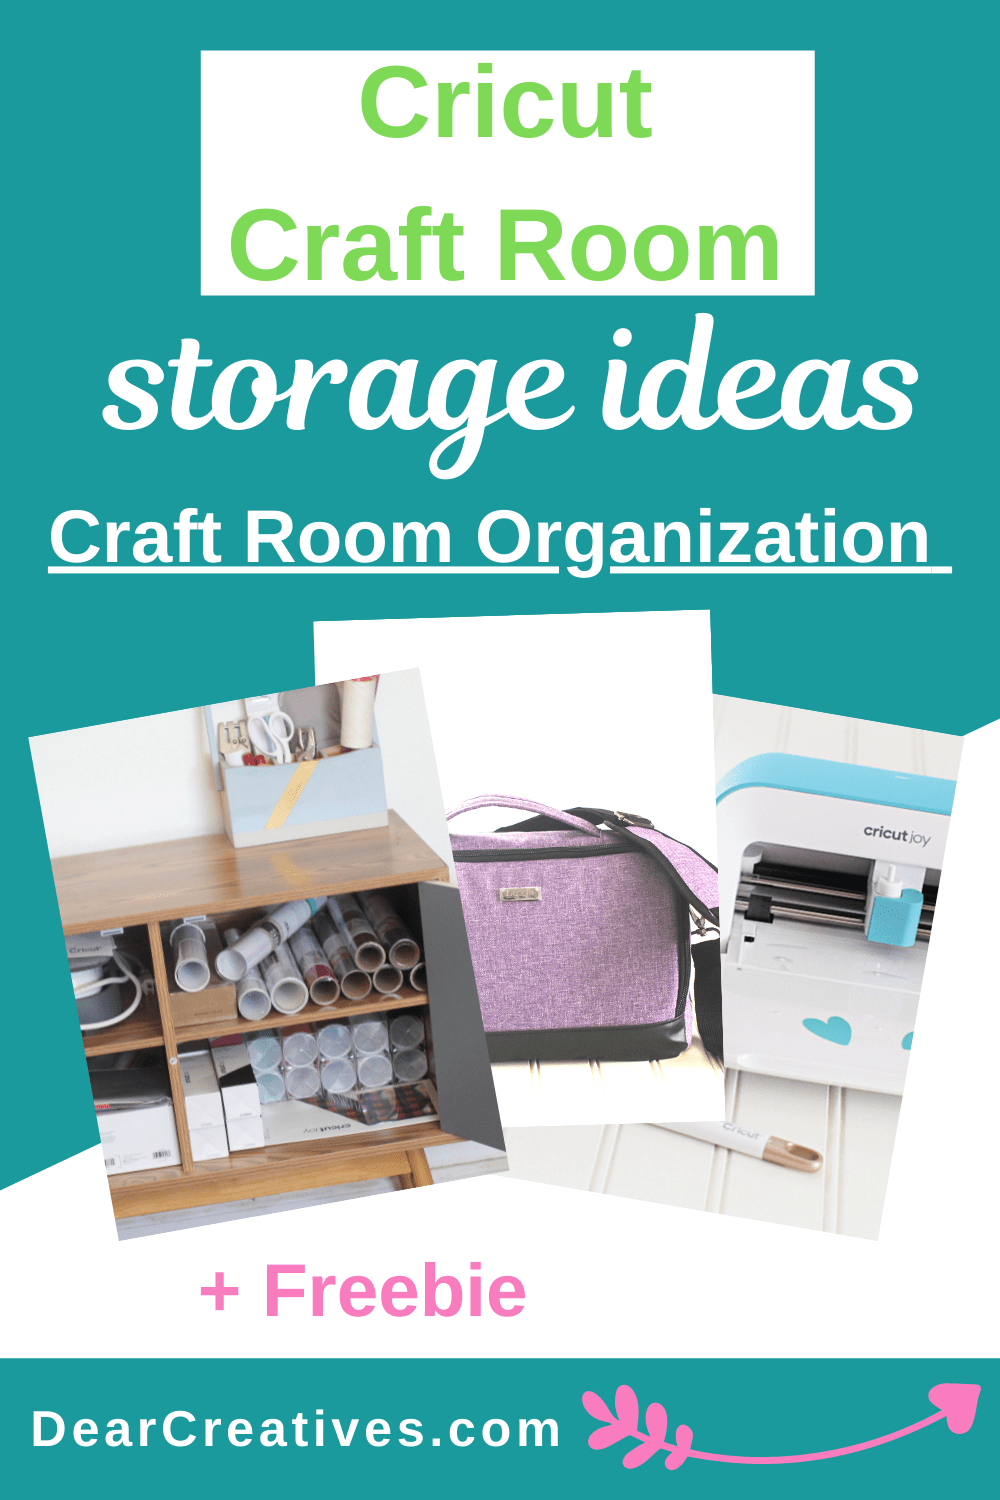 Cricut Storage Ideas - Craft Room Organization - Dear Creatives